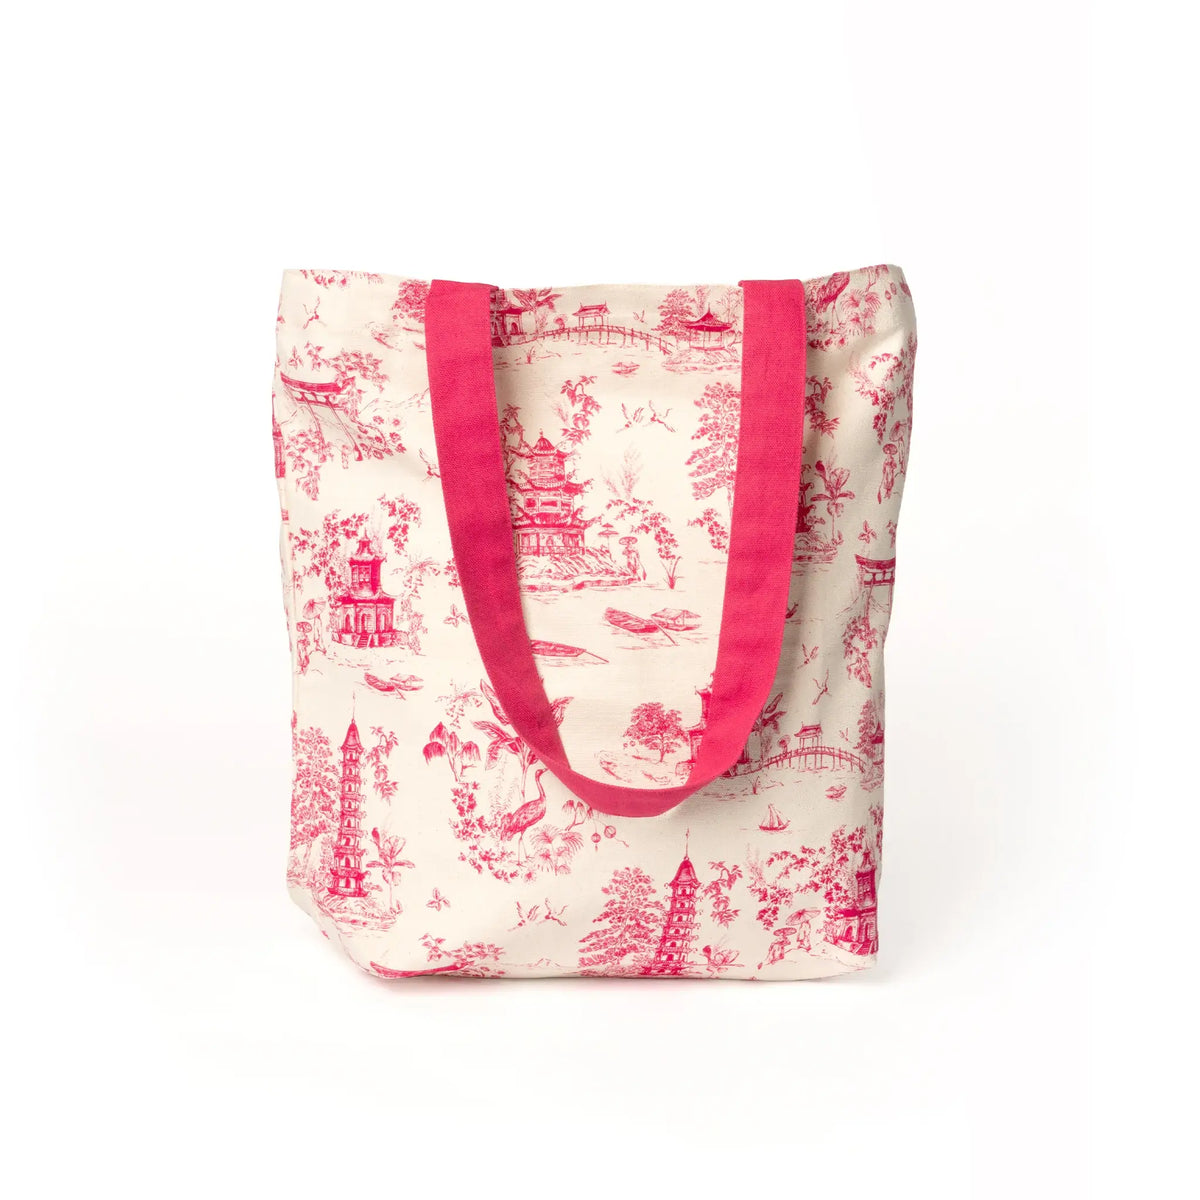 Pink Japanese Oriental Garden Tote Bag